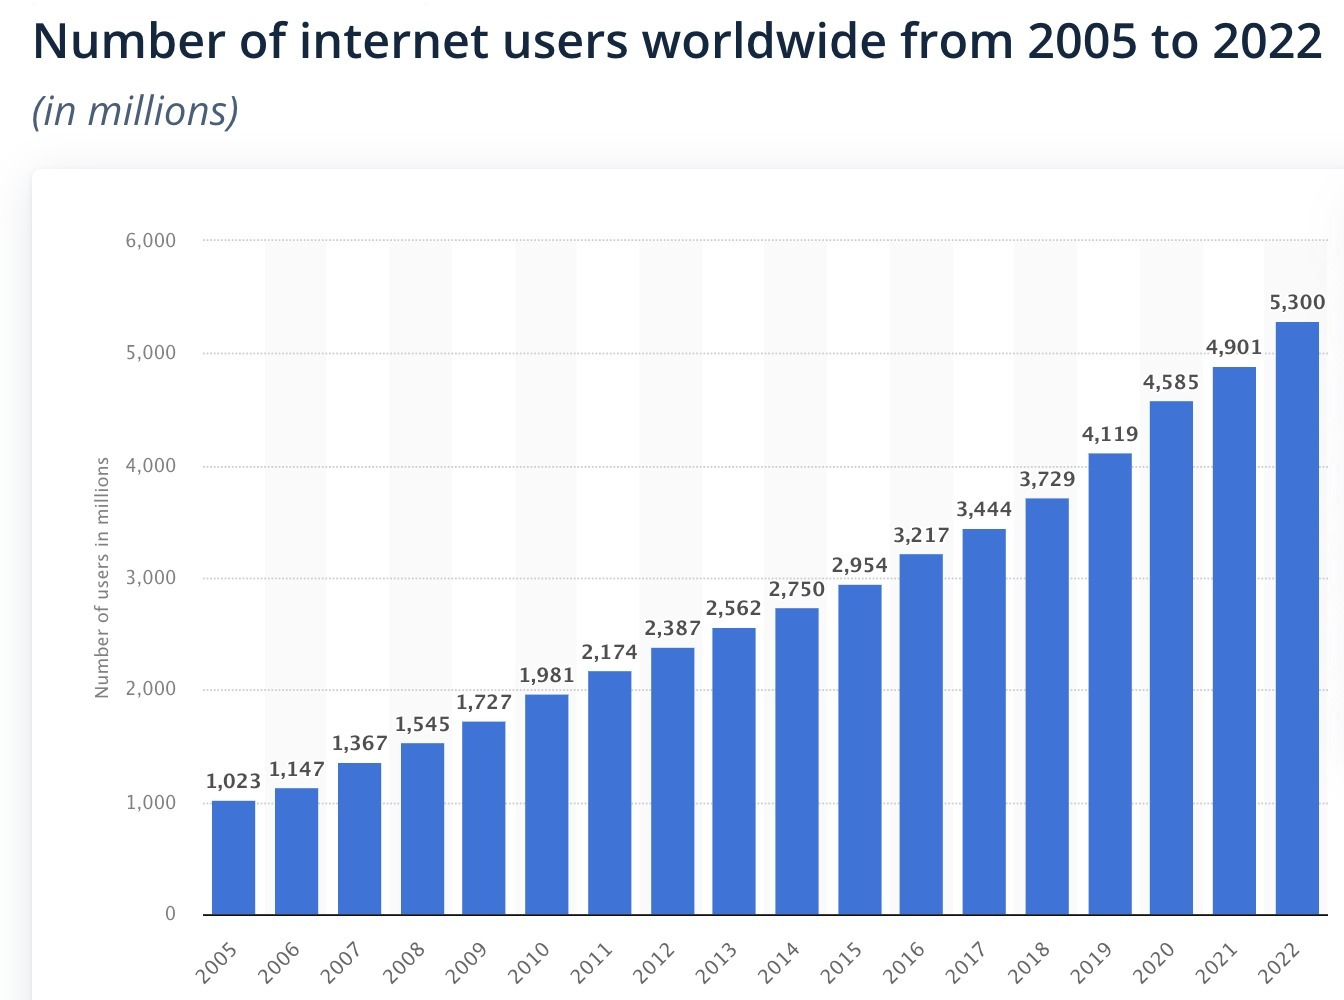 https://www.statista.com/statistics/273018/number-of-internet-users-worldwide/